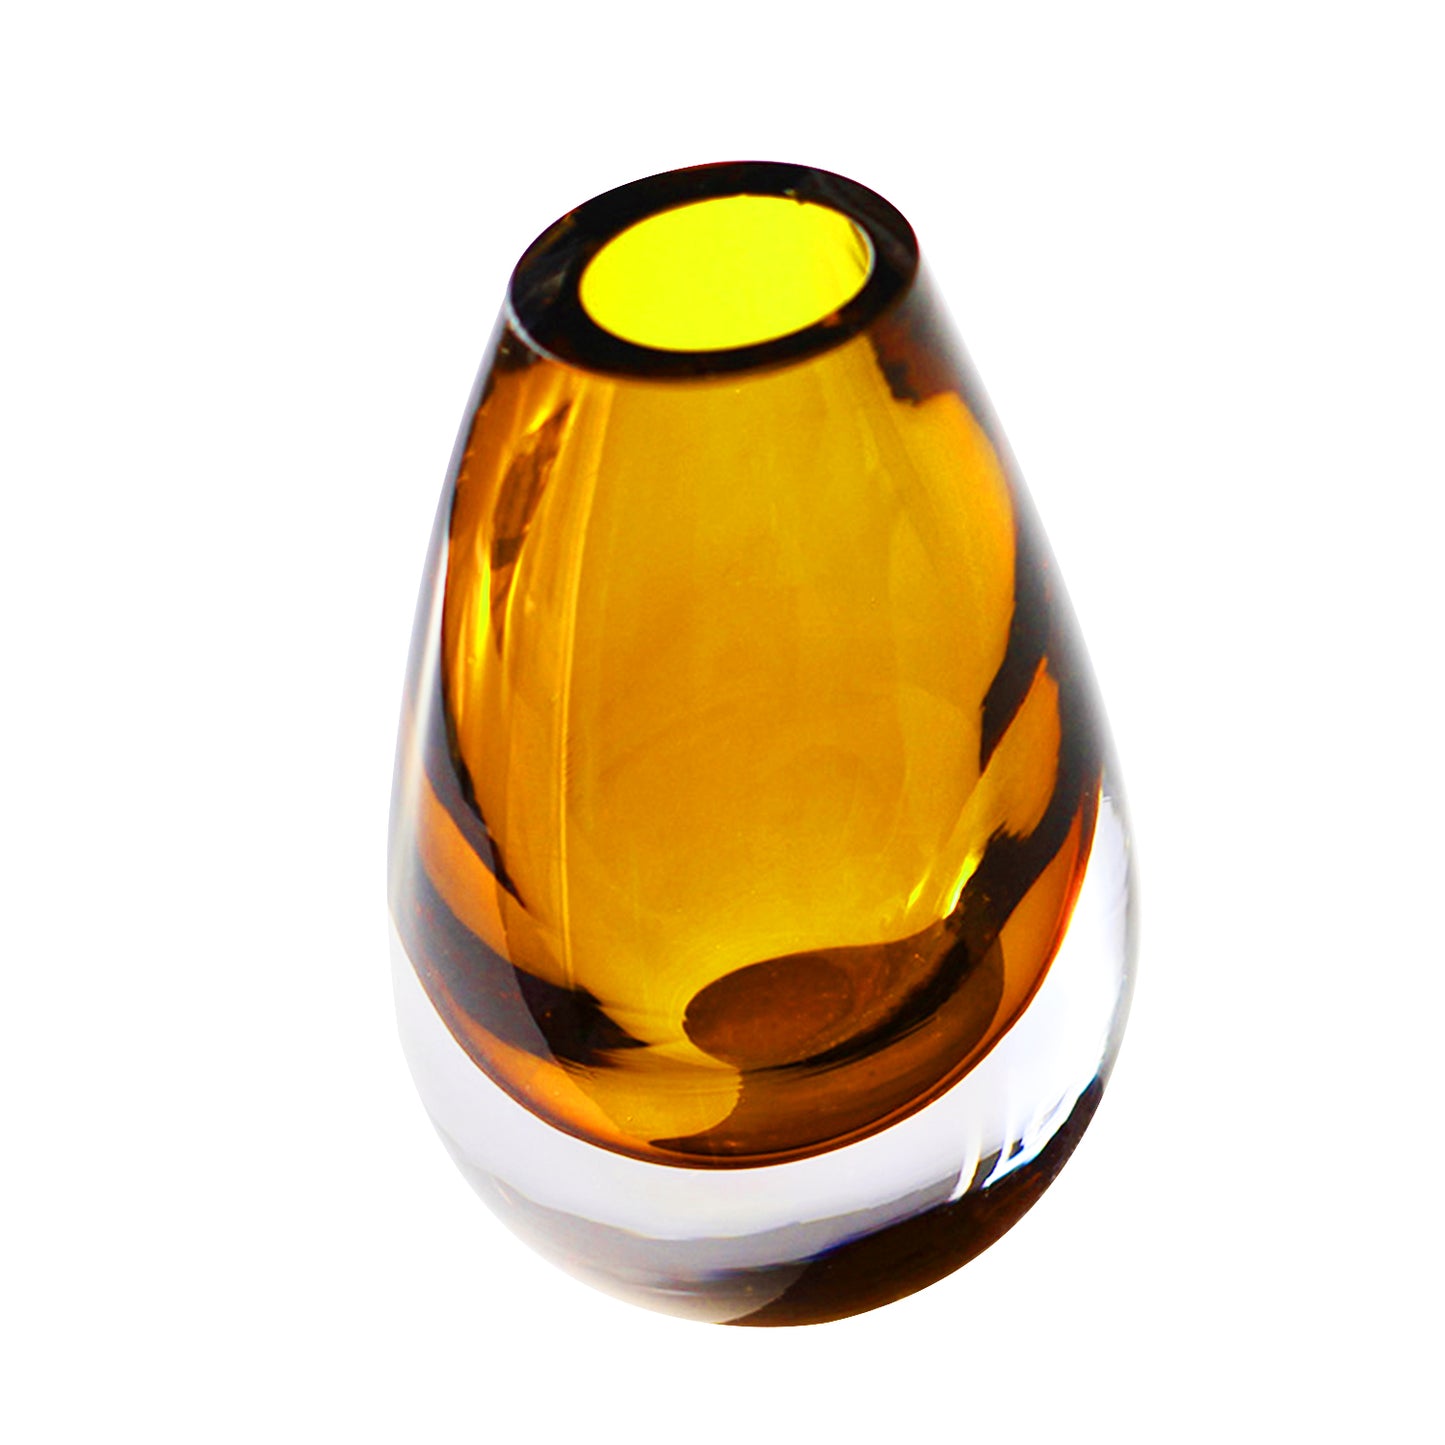 Drop Amber Yellow Vase - 15 x 10.9 x 8 cm - Hand-Blown Thick Glass - Eco-Friendly Elegance